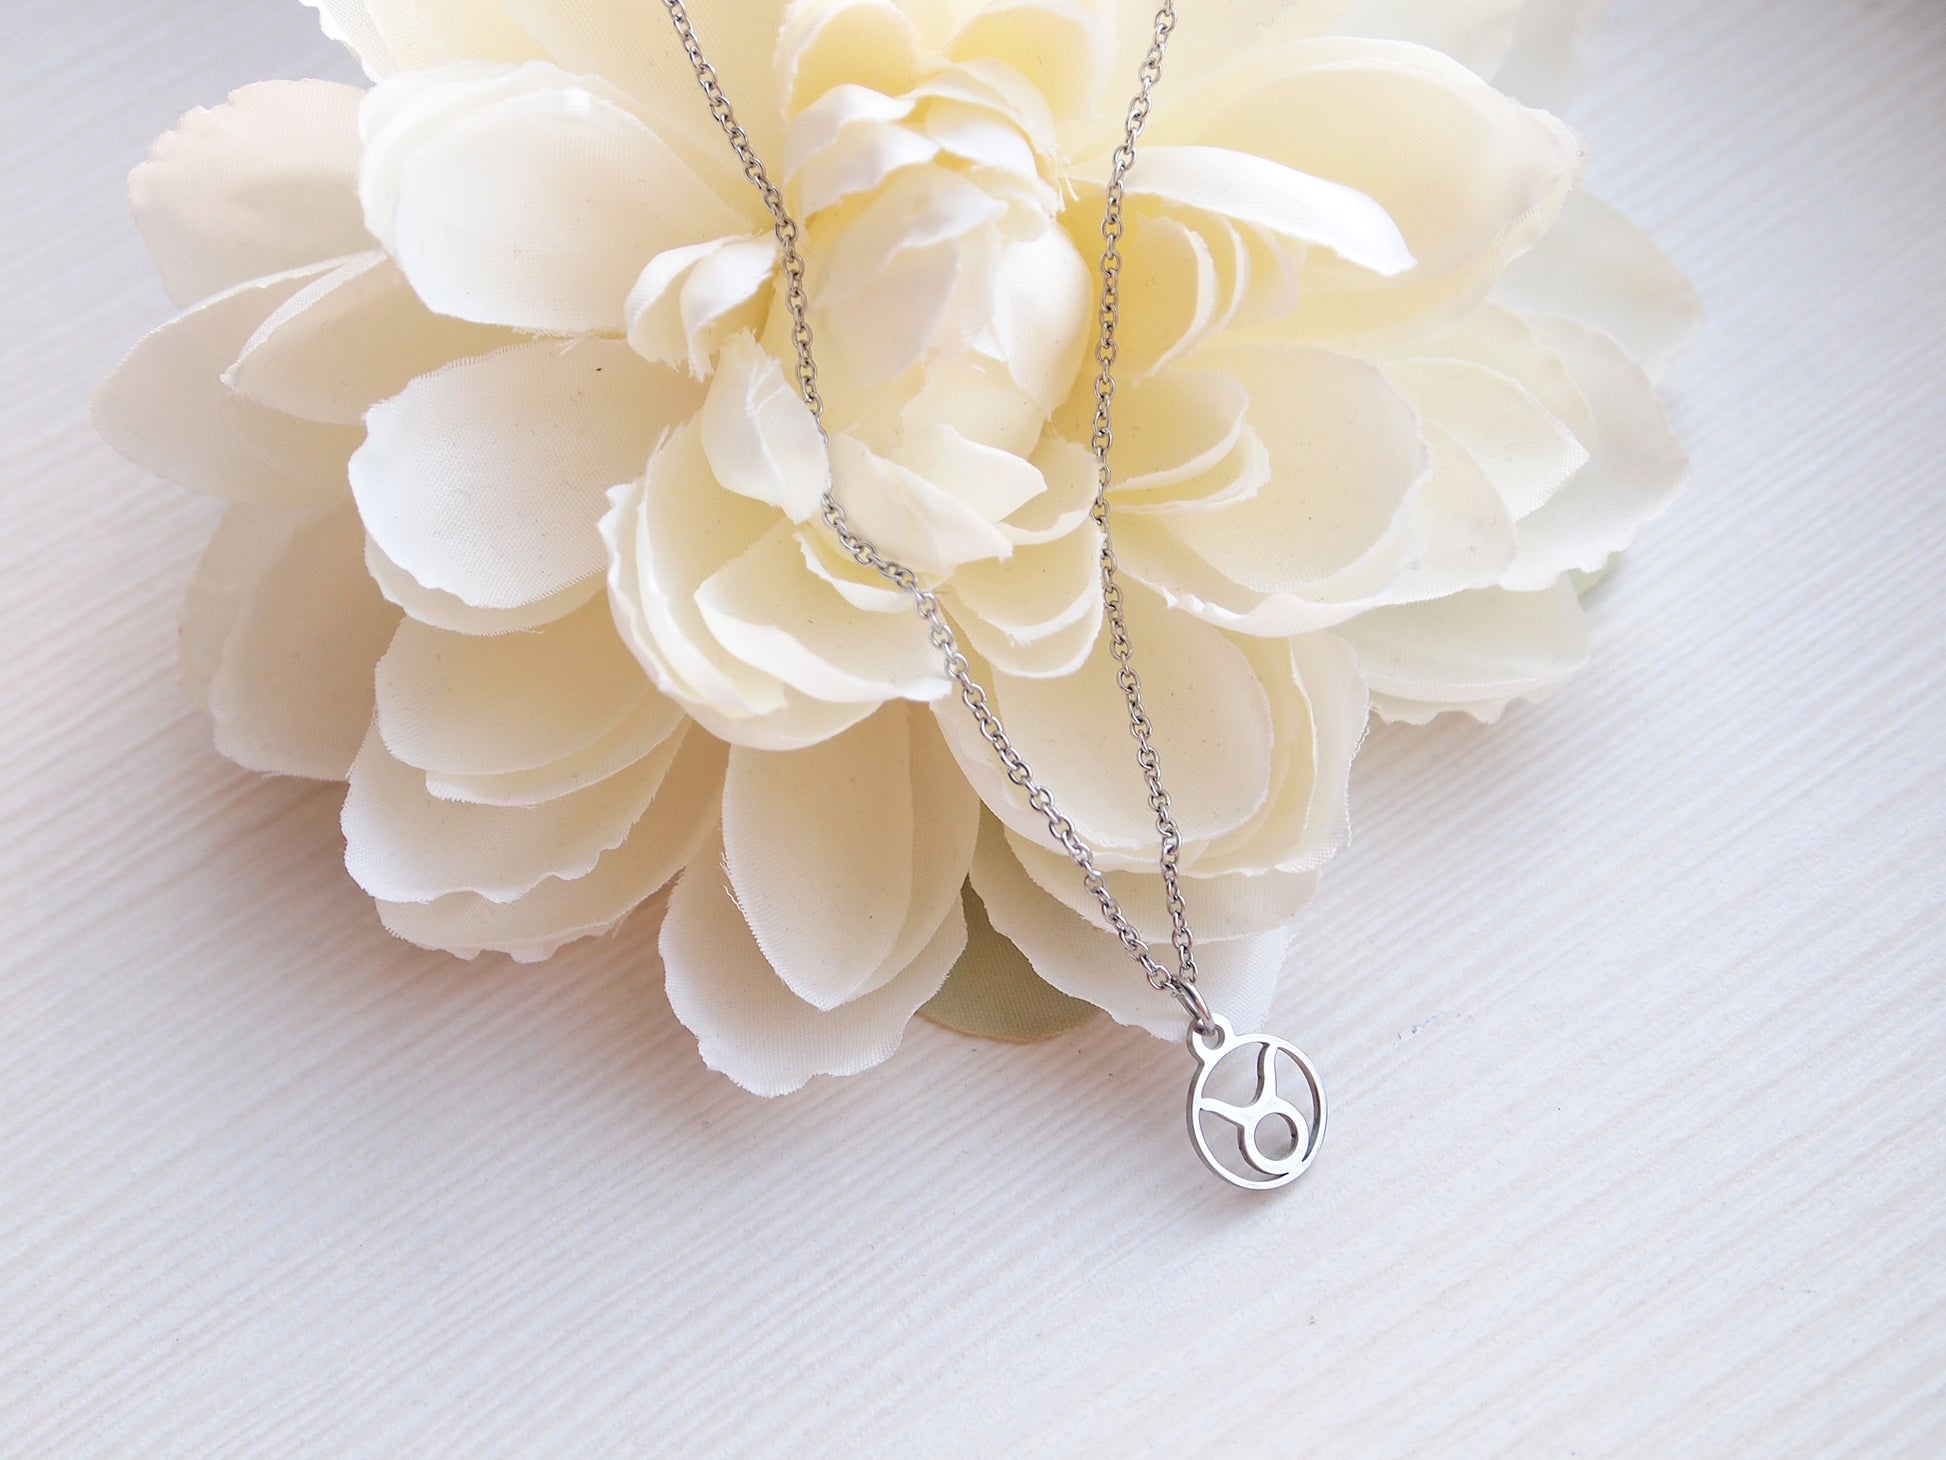 silver zodiac necklace, taurus astro sign